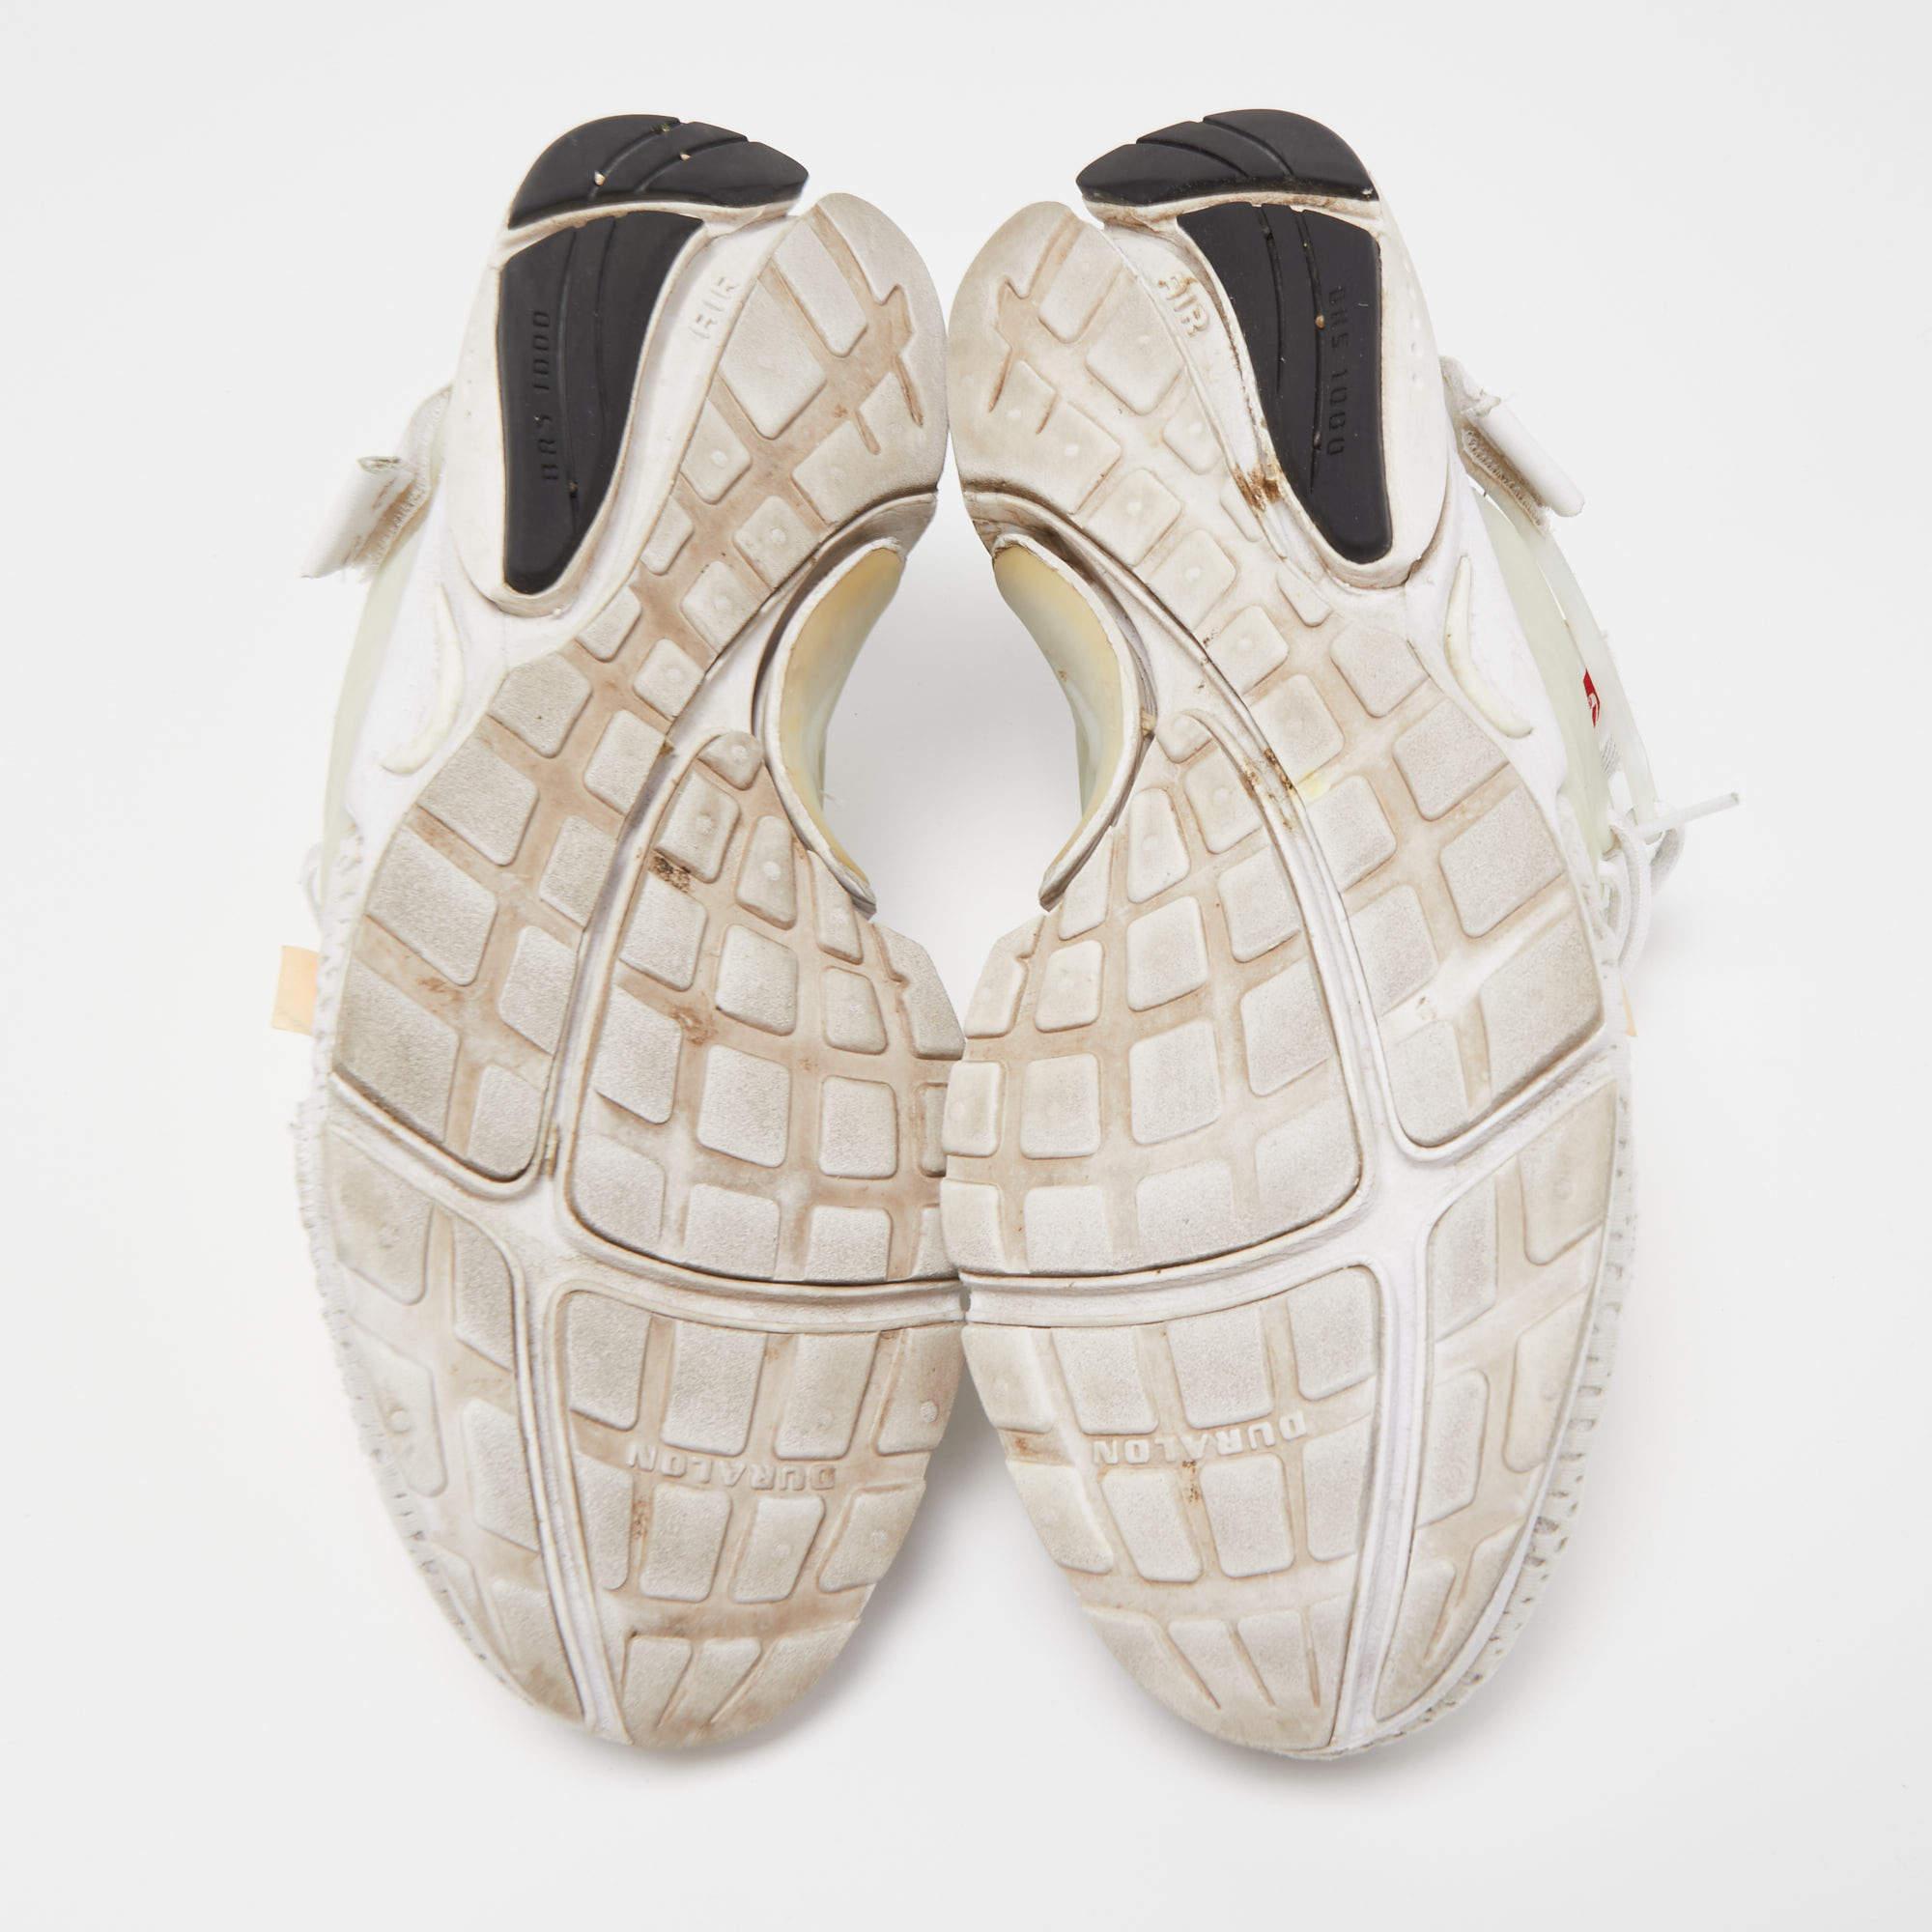 Nike x Off White White Fabric Air Presto Low Trainers Sneakers Size 42.5 In Good Condition For Sale In Dubai, Al Qouz 2